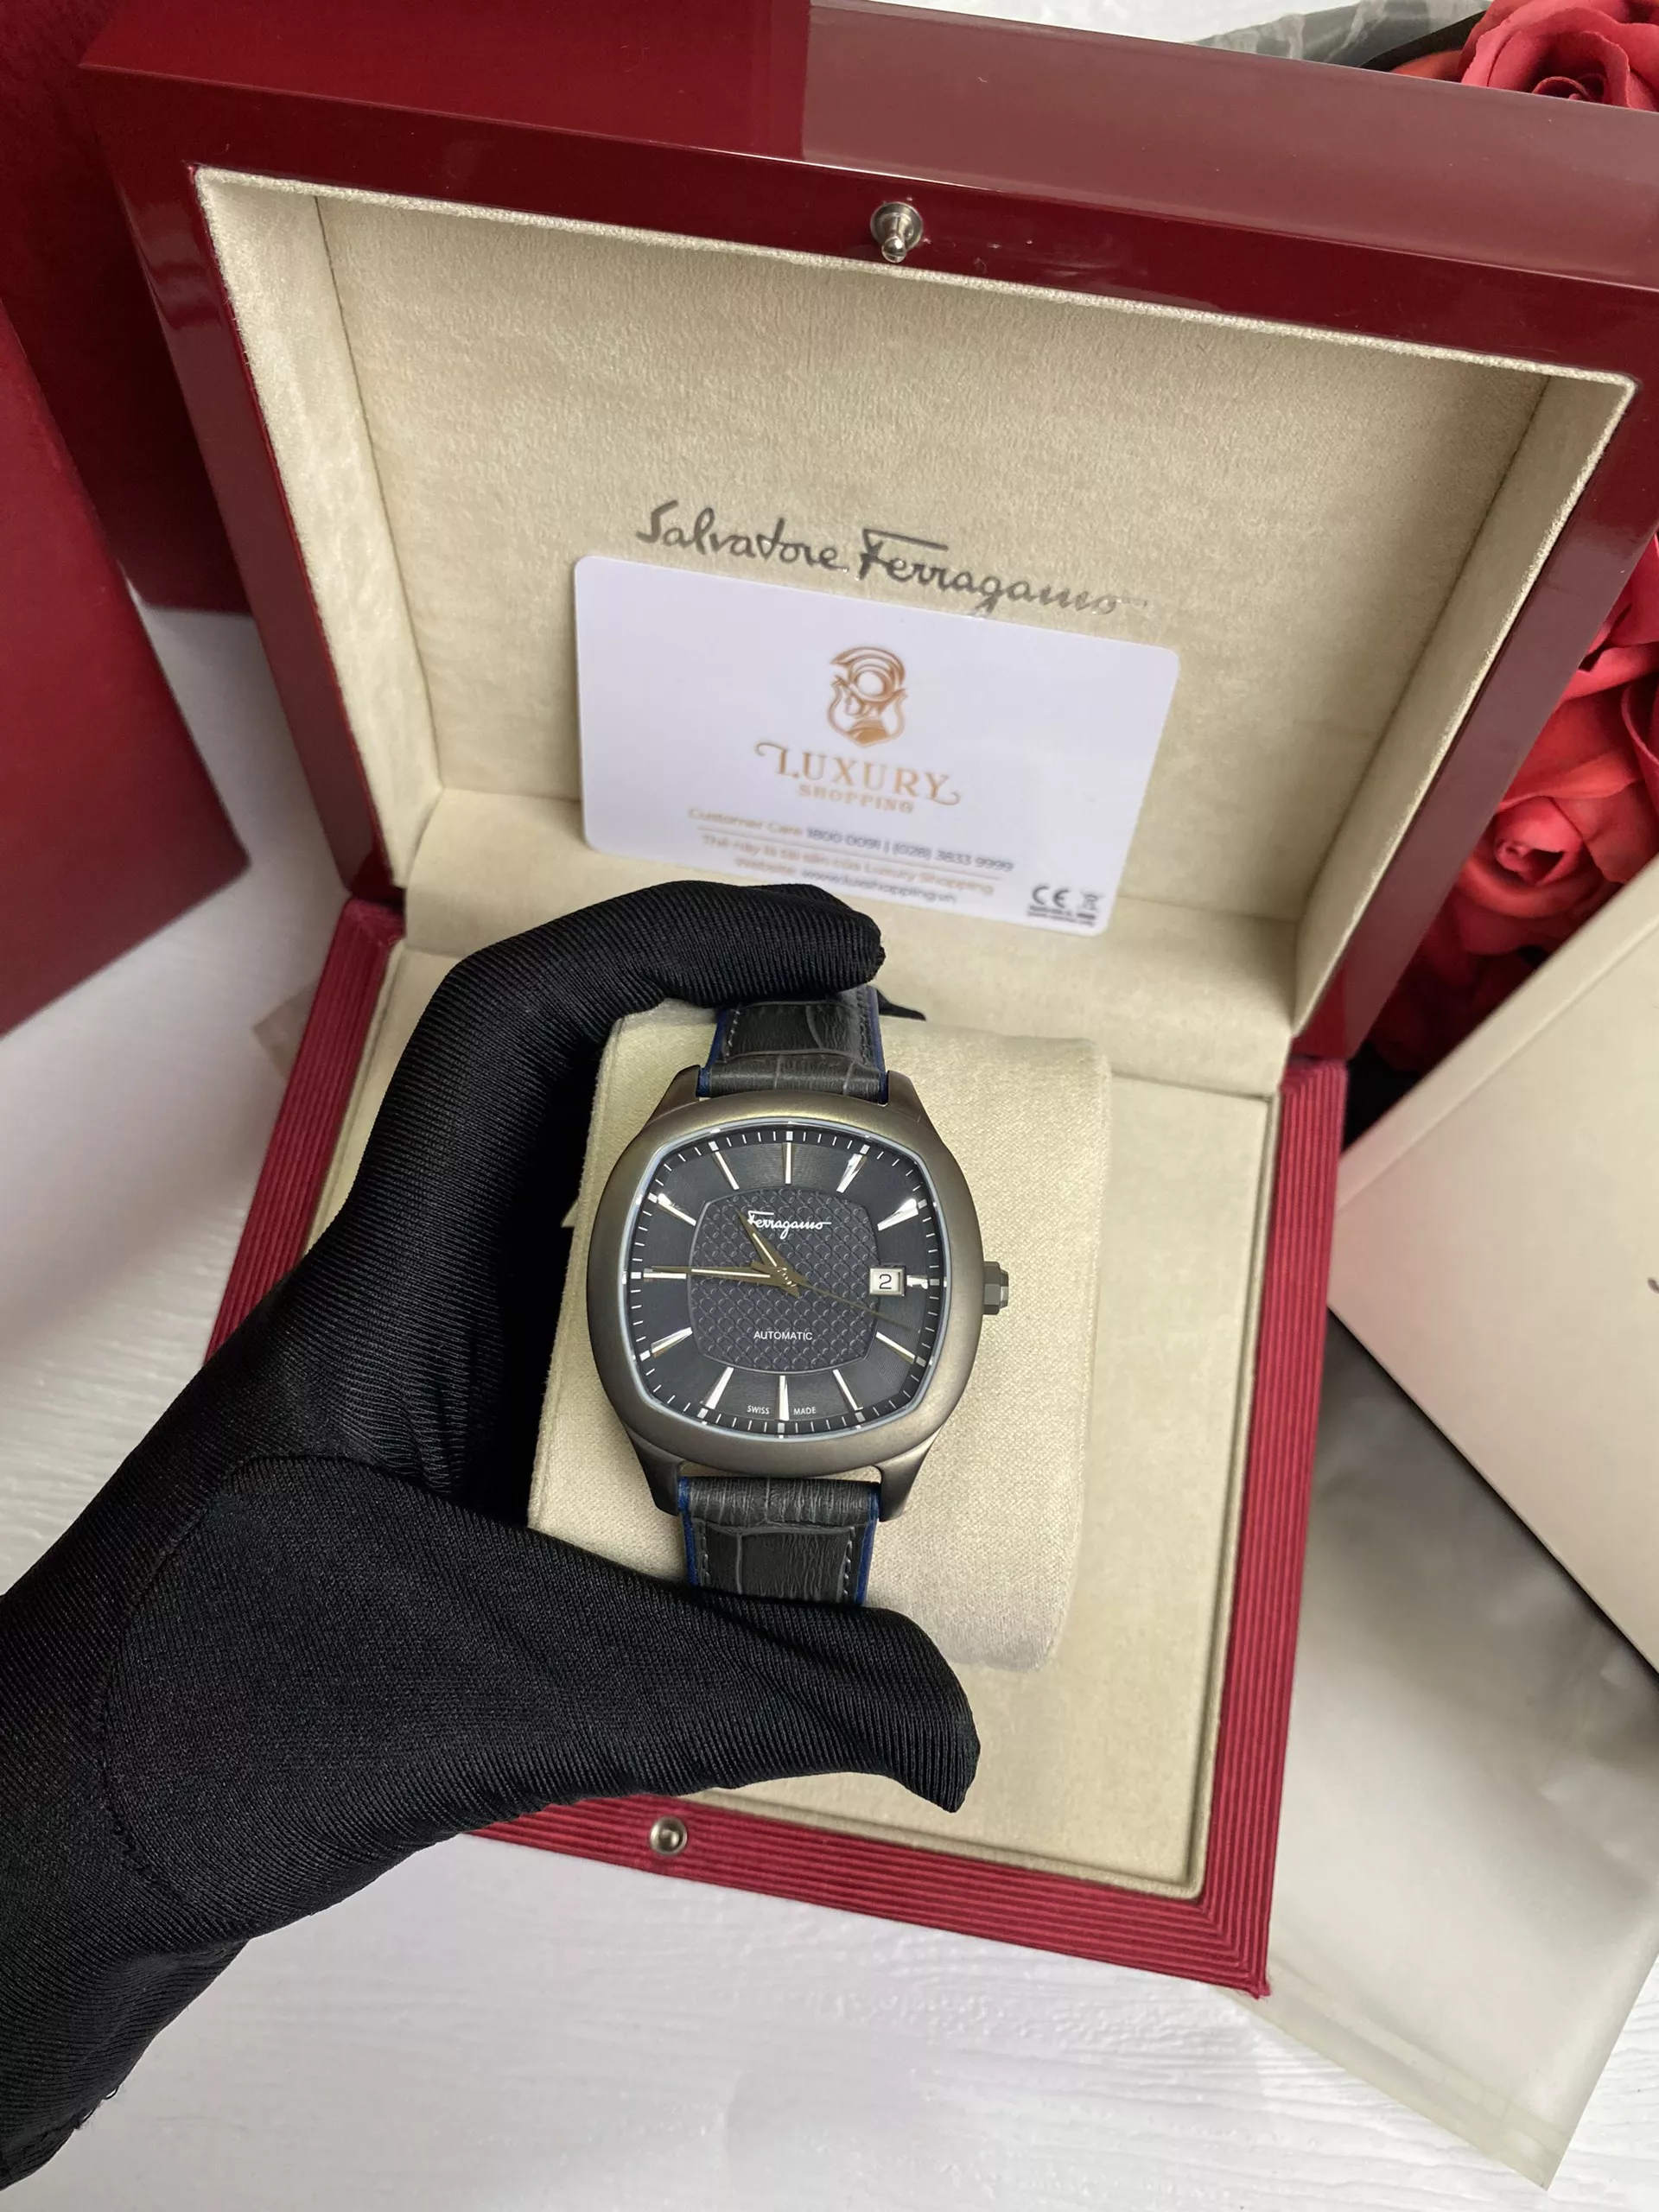 Salvatore Ferragamo Time Watch 41mm